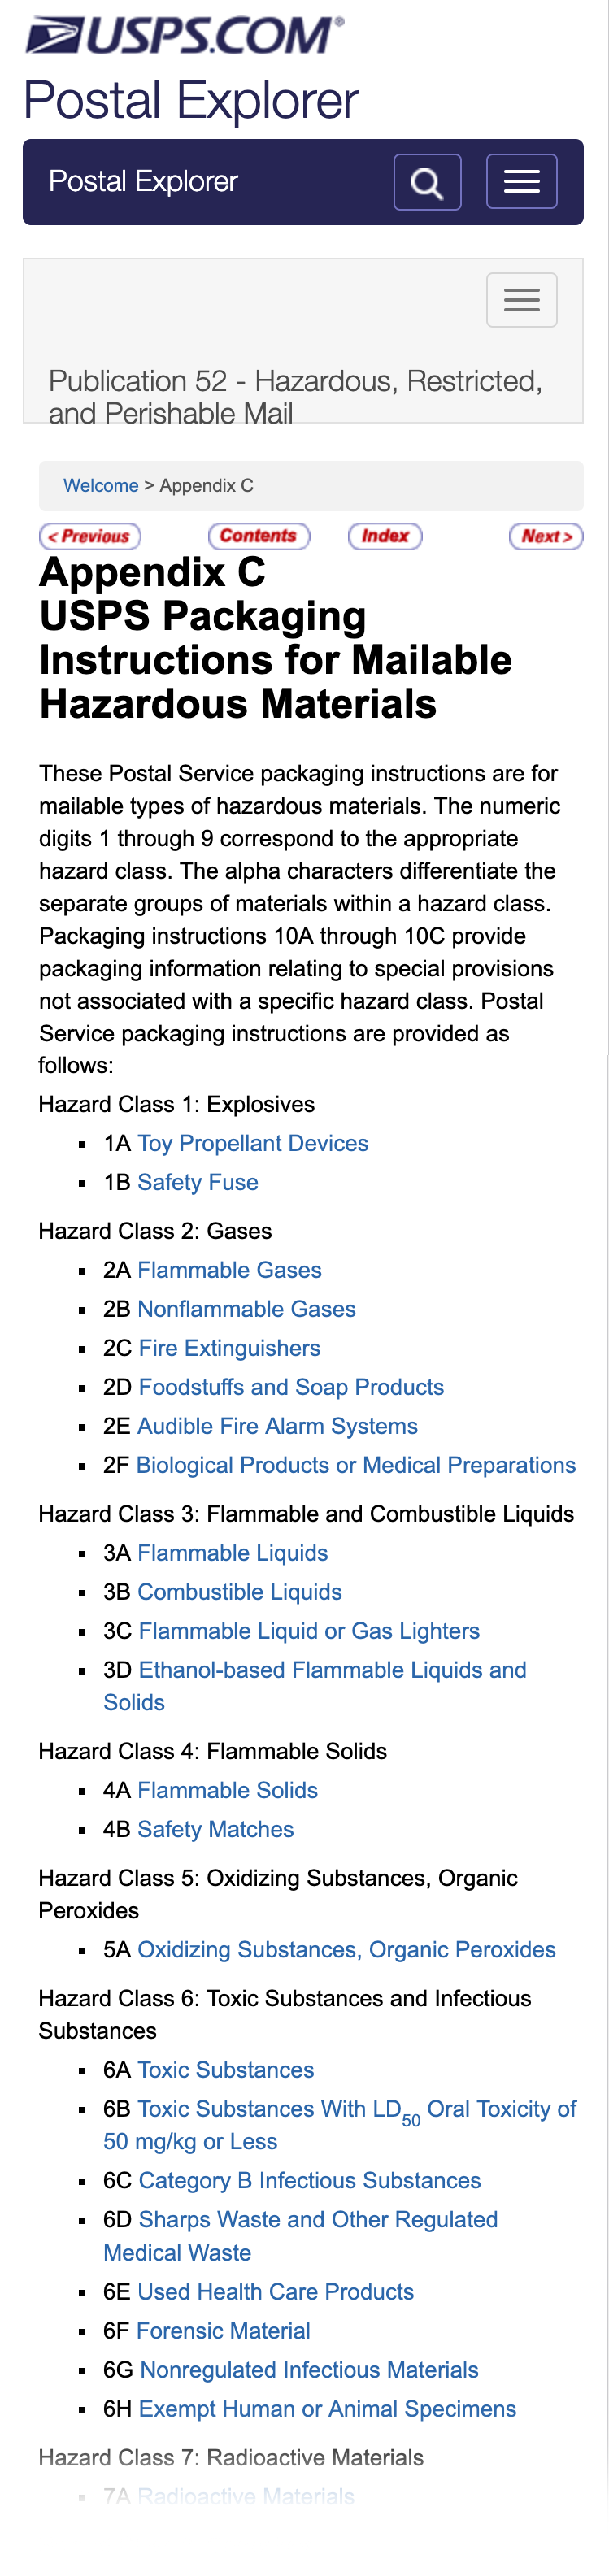 Publication 52, Appendix C USPS packaging instructions for mailable hazardous materials.